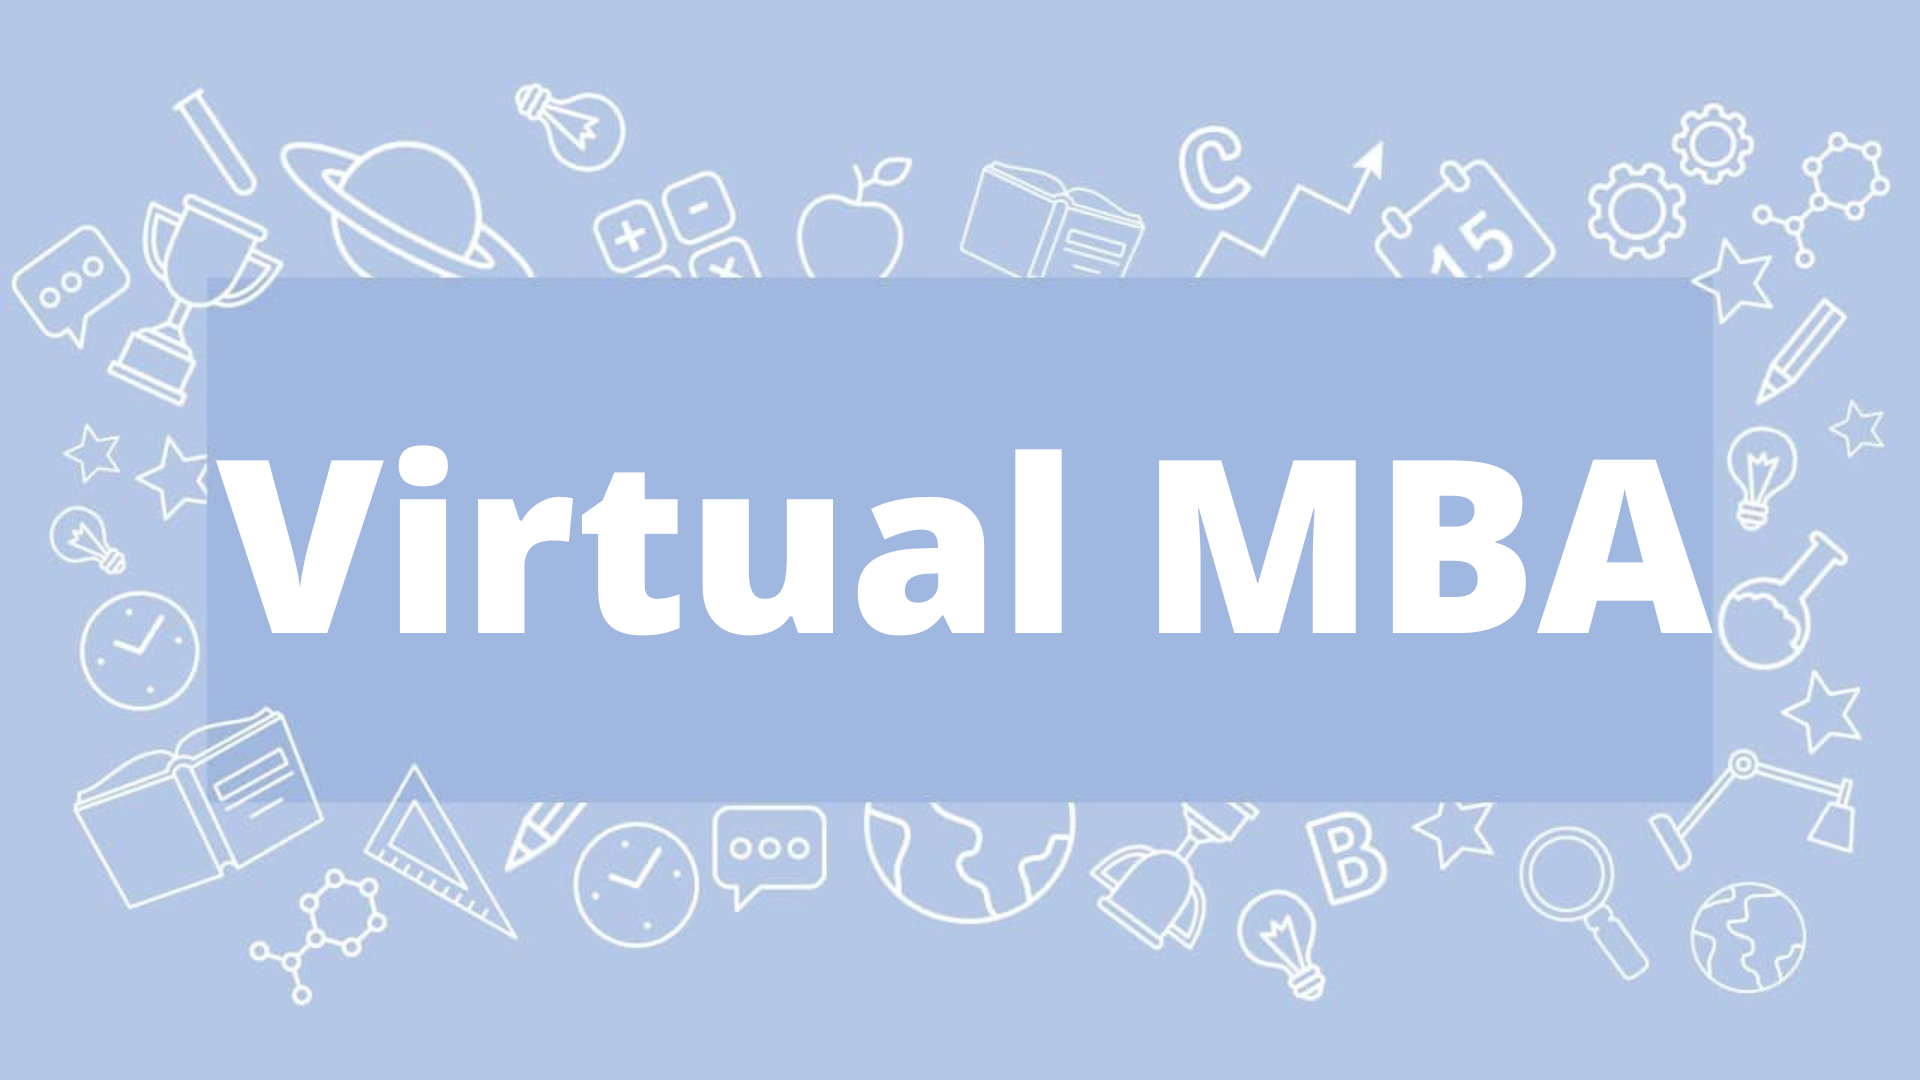 Virtual MBA